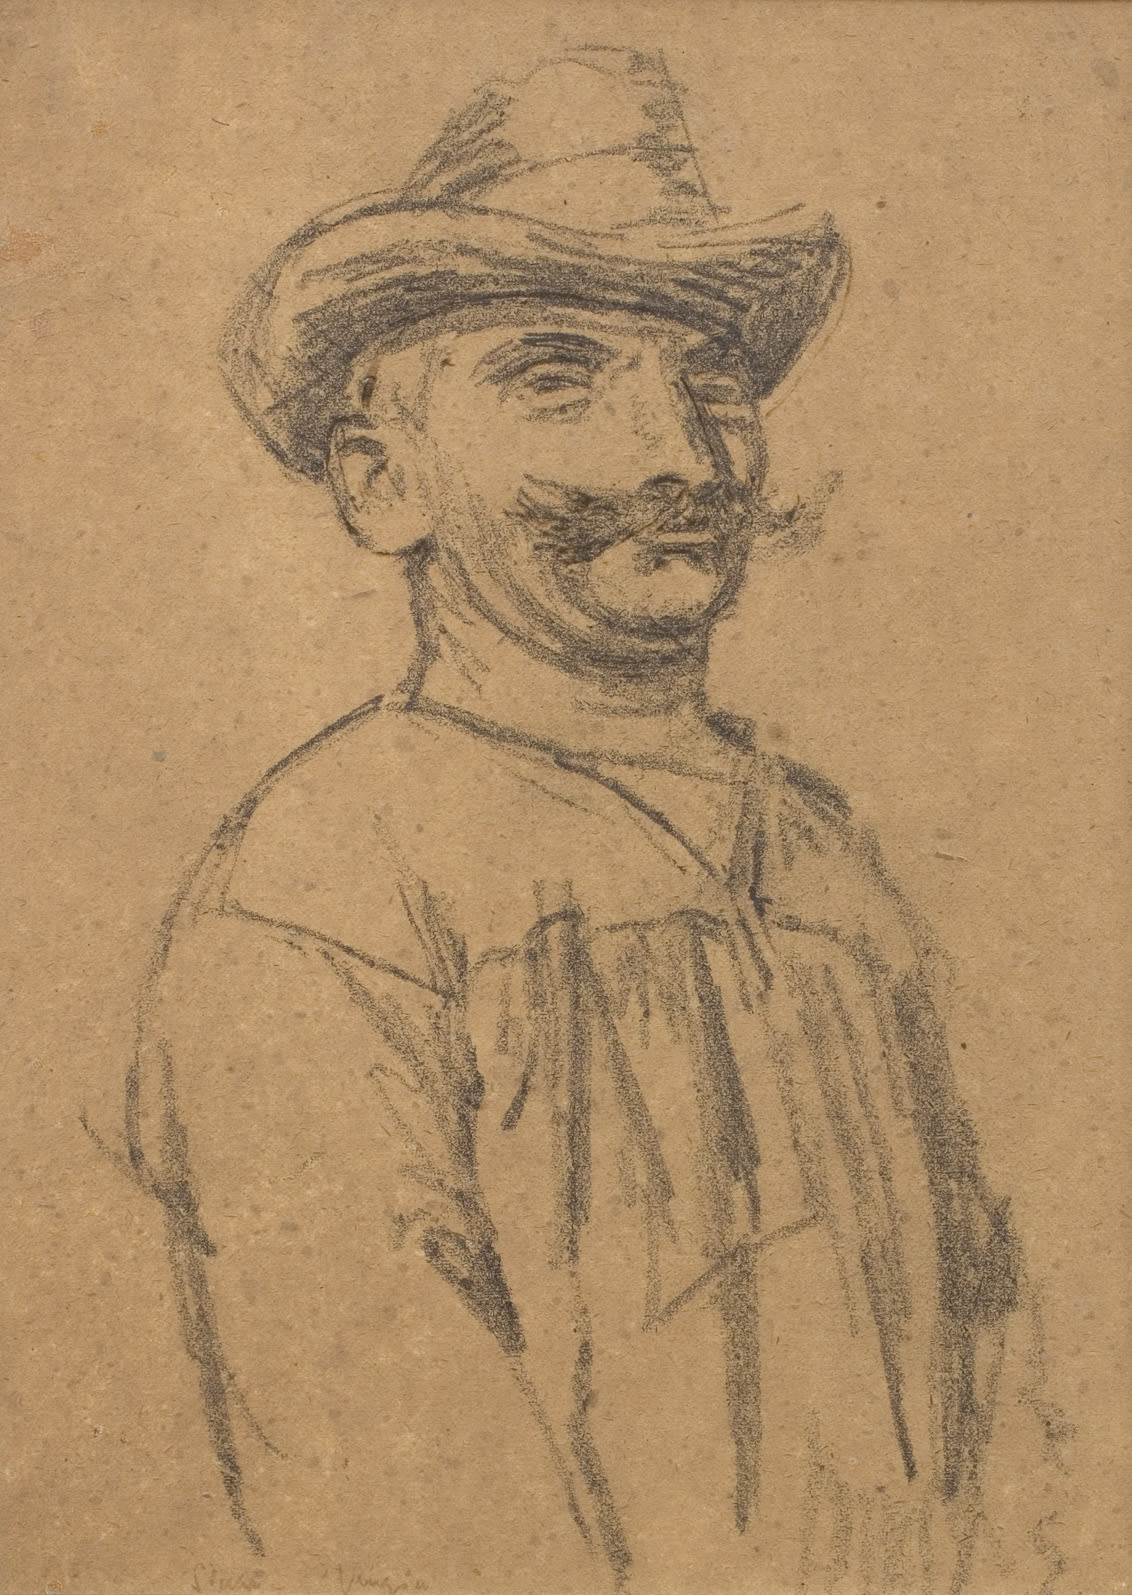 Walter Sickert, Portrait of Signor De Rossi or Gondolier, 1903, c.